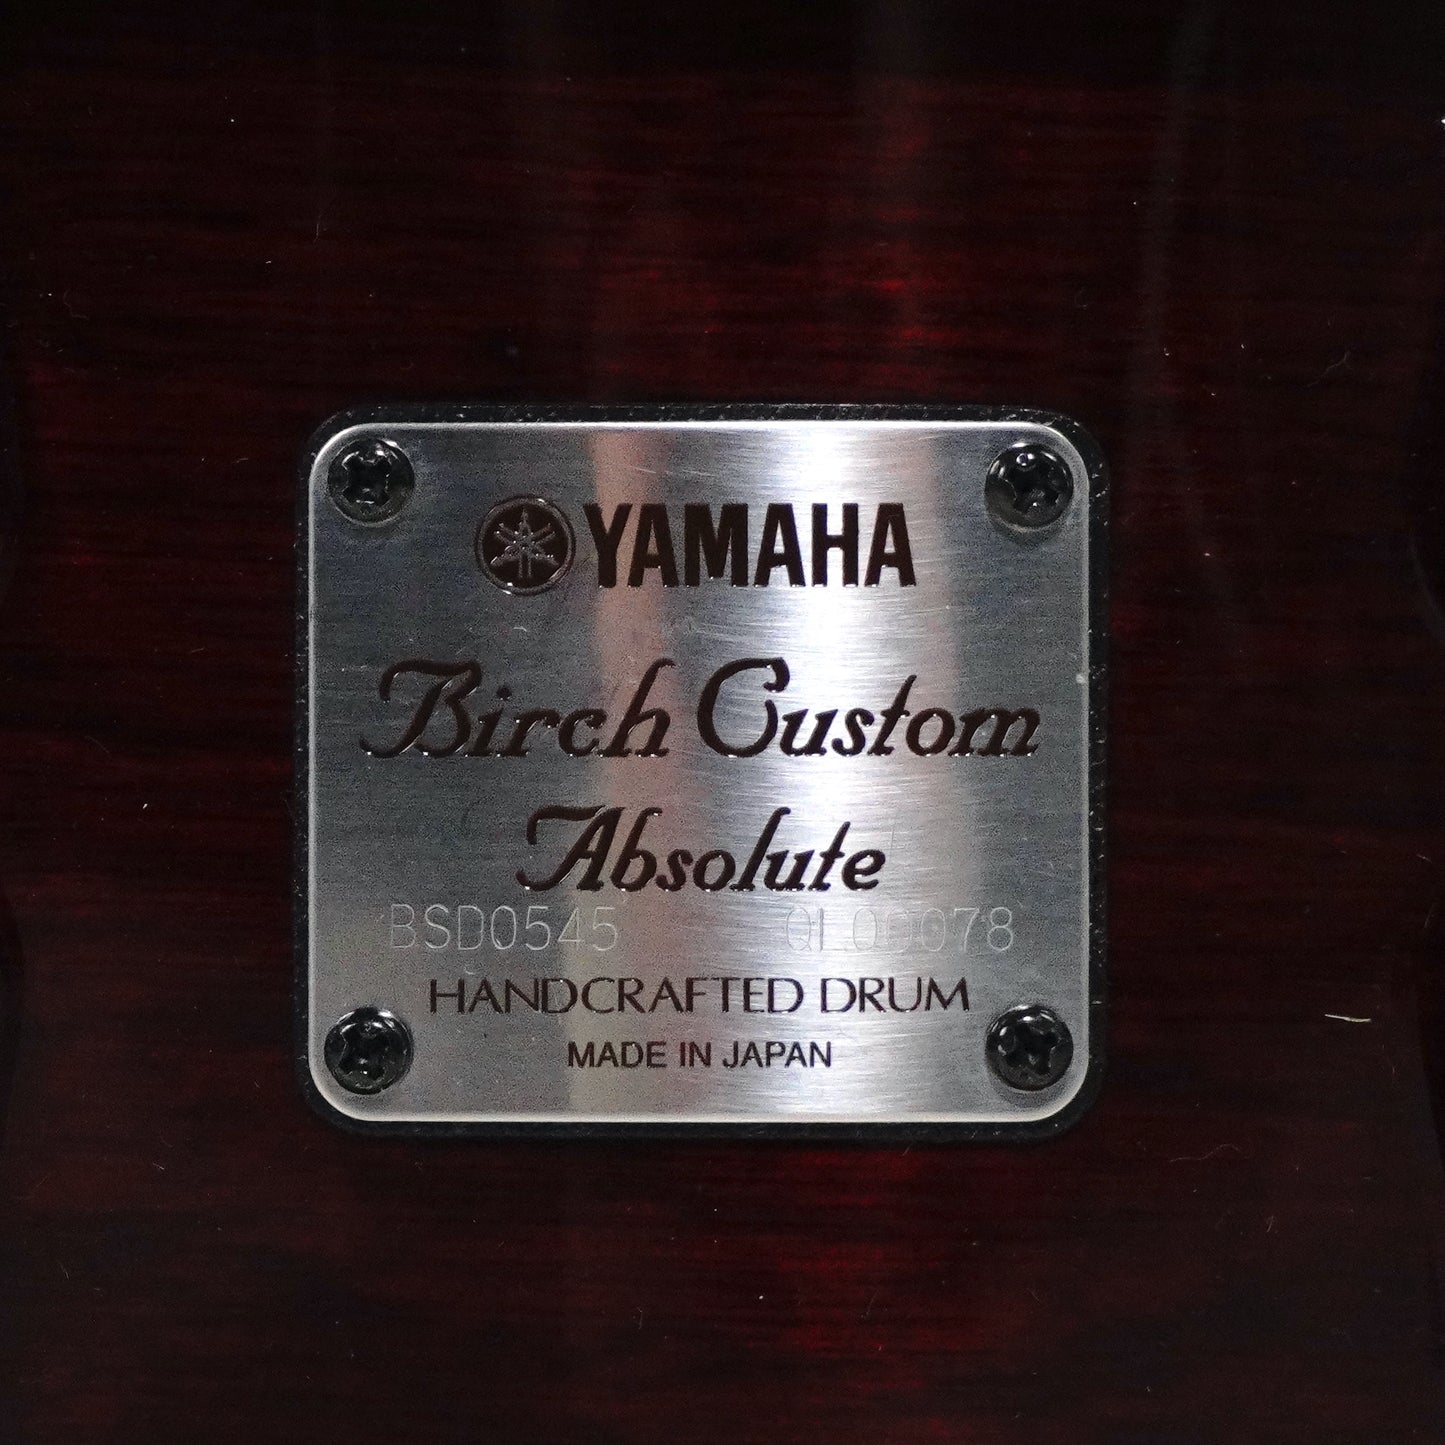 Yamaha 14” x 5” Birch Custom Absolute in Cherry Wood Finish